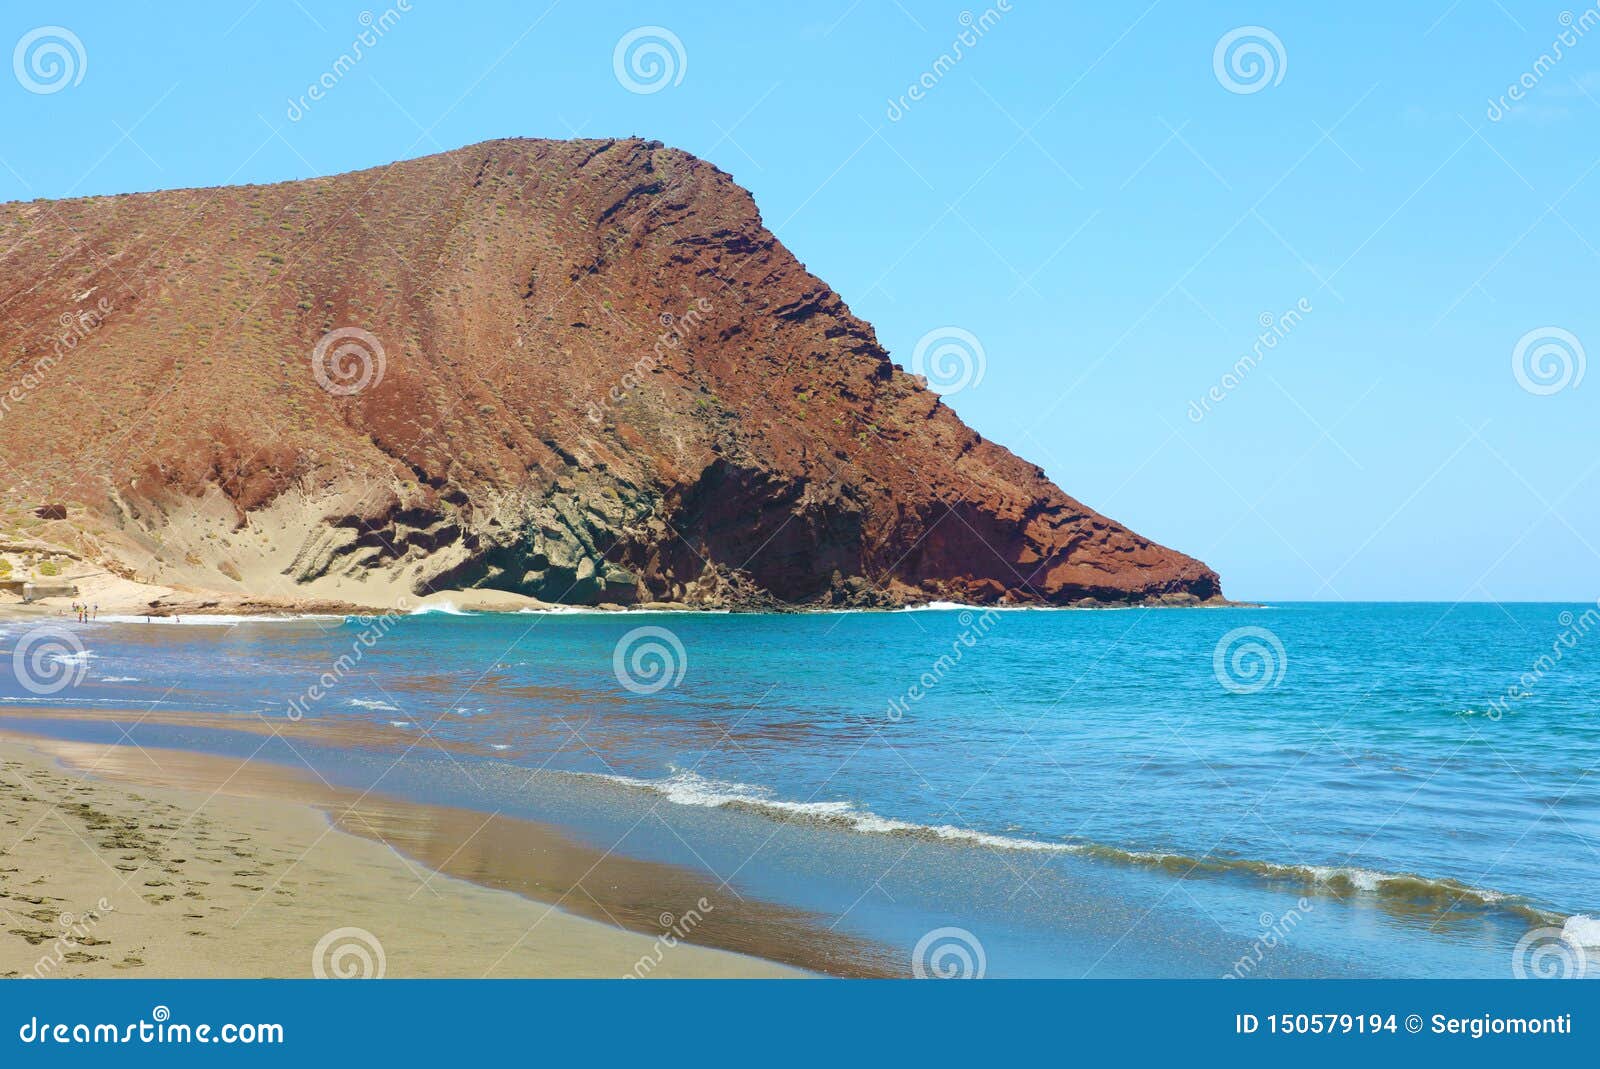 beautiful view of playa de la tejita with montana roja red mountain. la tejita beach in el medano, tenerife, canary islands,